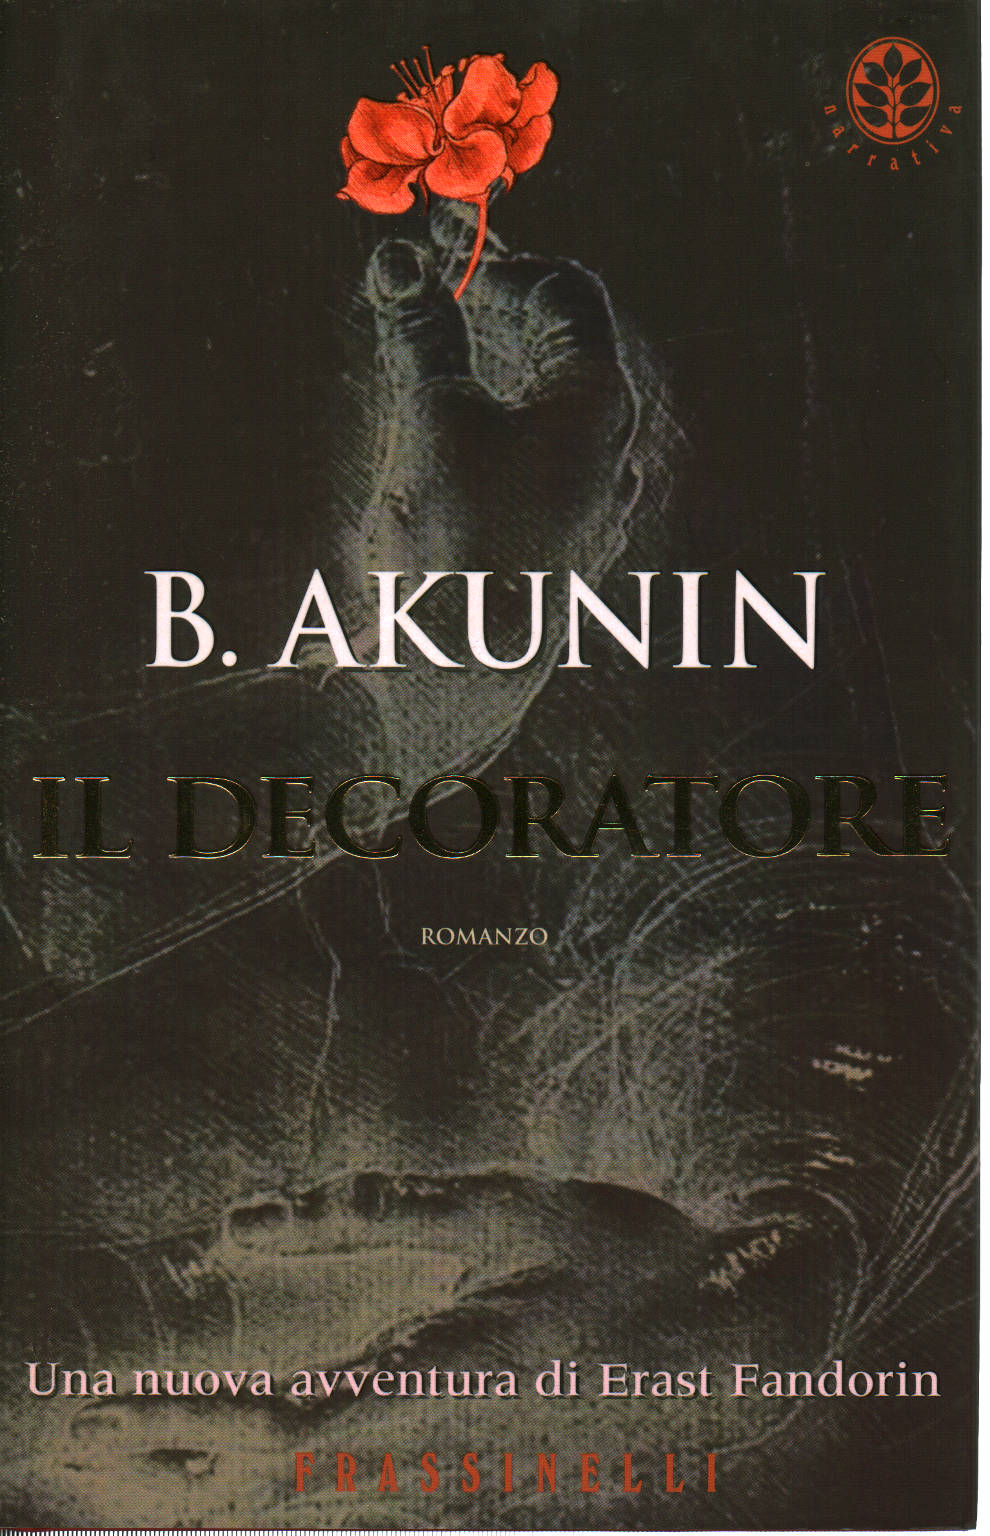 Il decoratore, B. Akunin